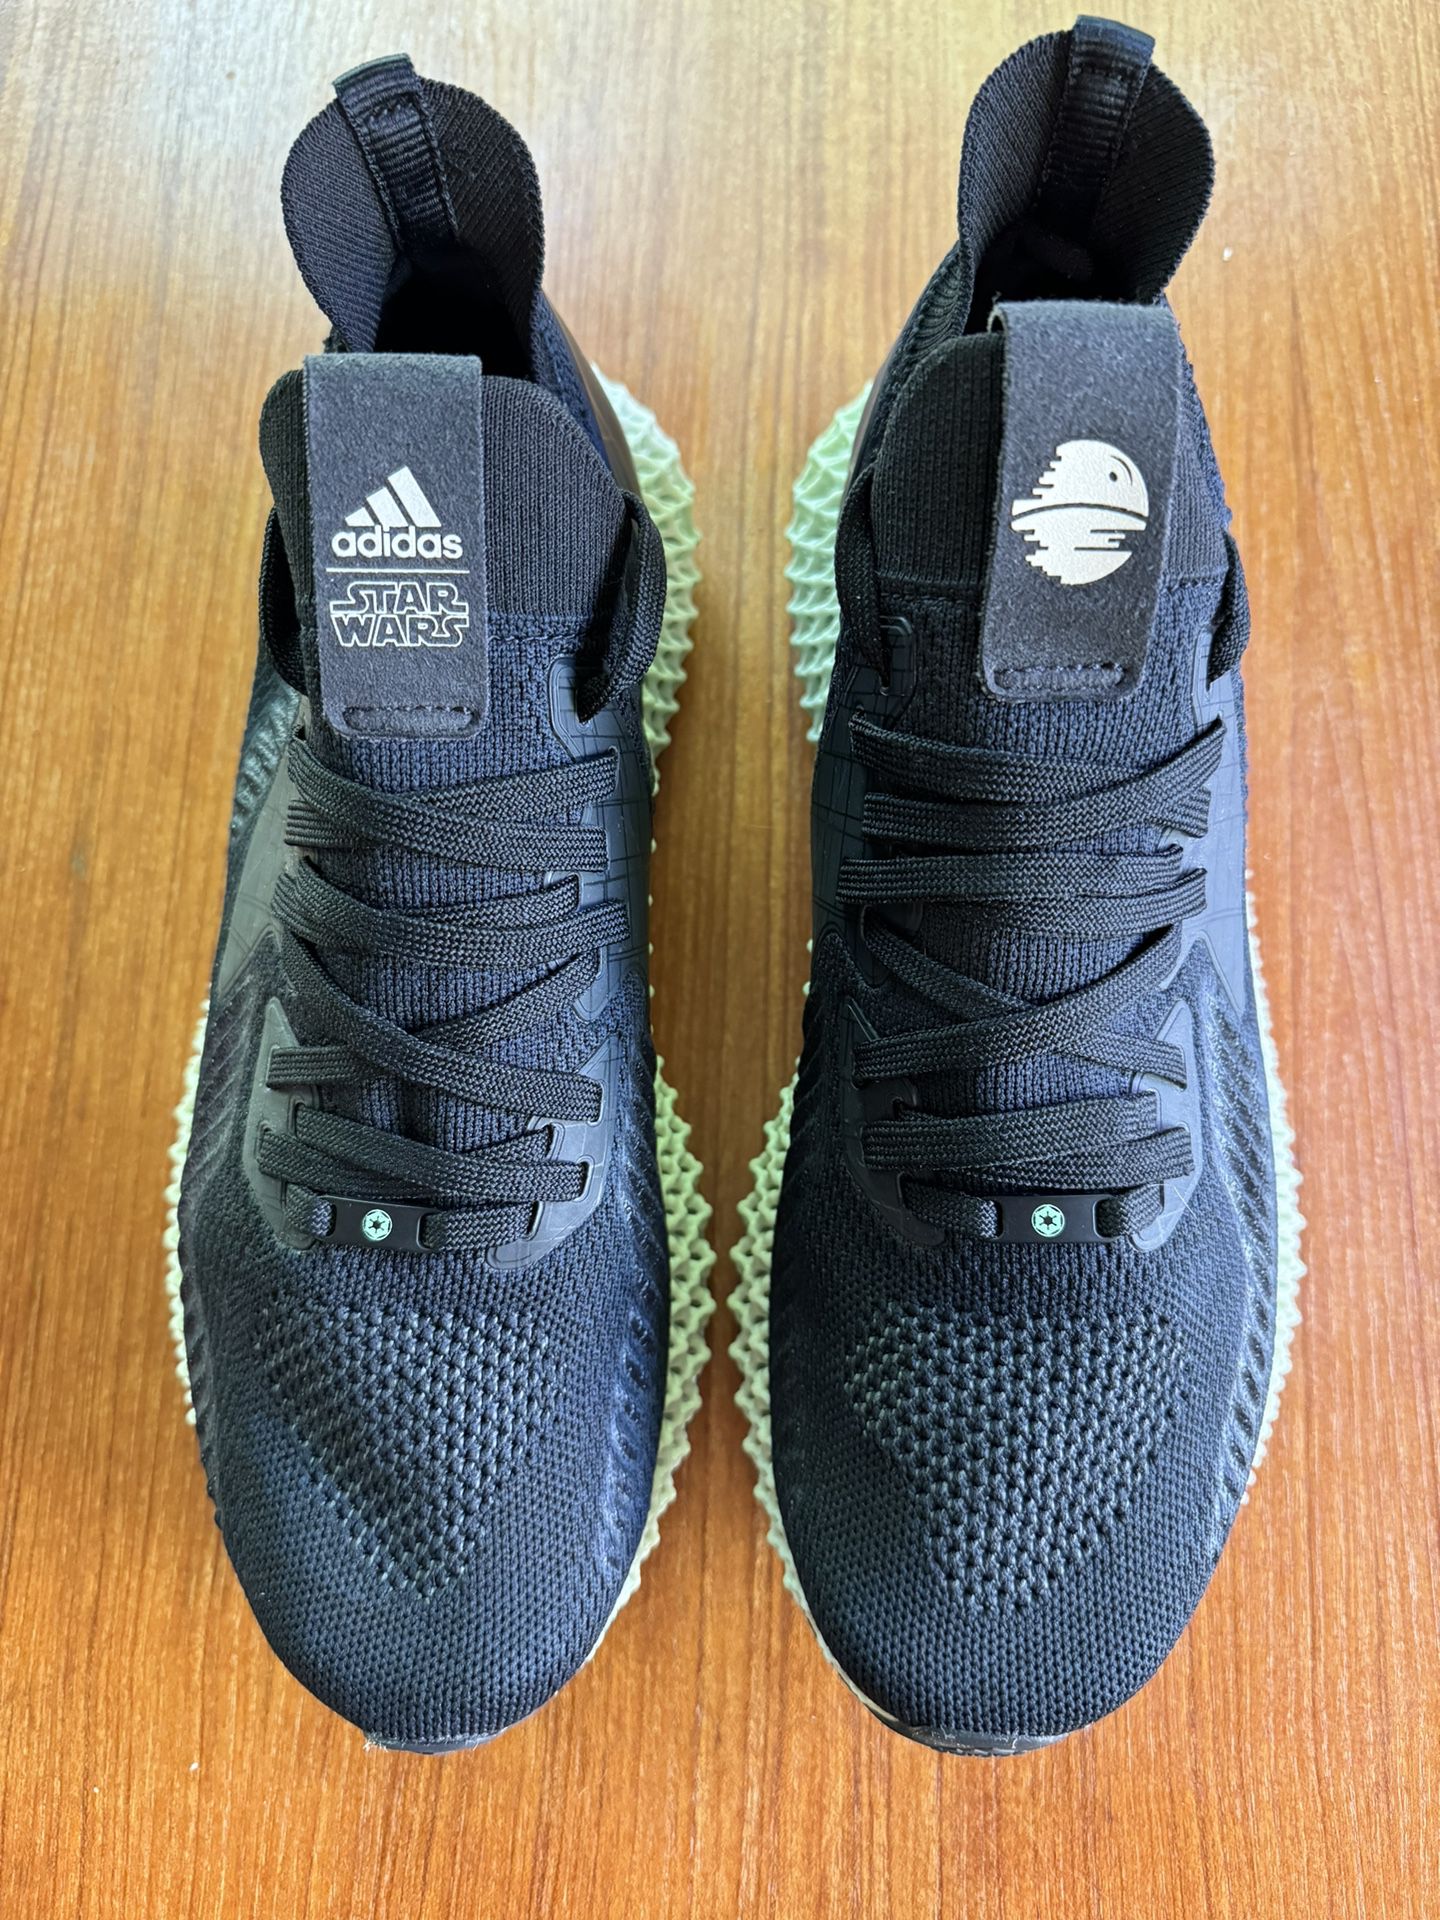 Adidas Alphaedge 4D Star Wars shoes — size 8.5